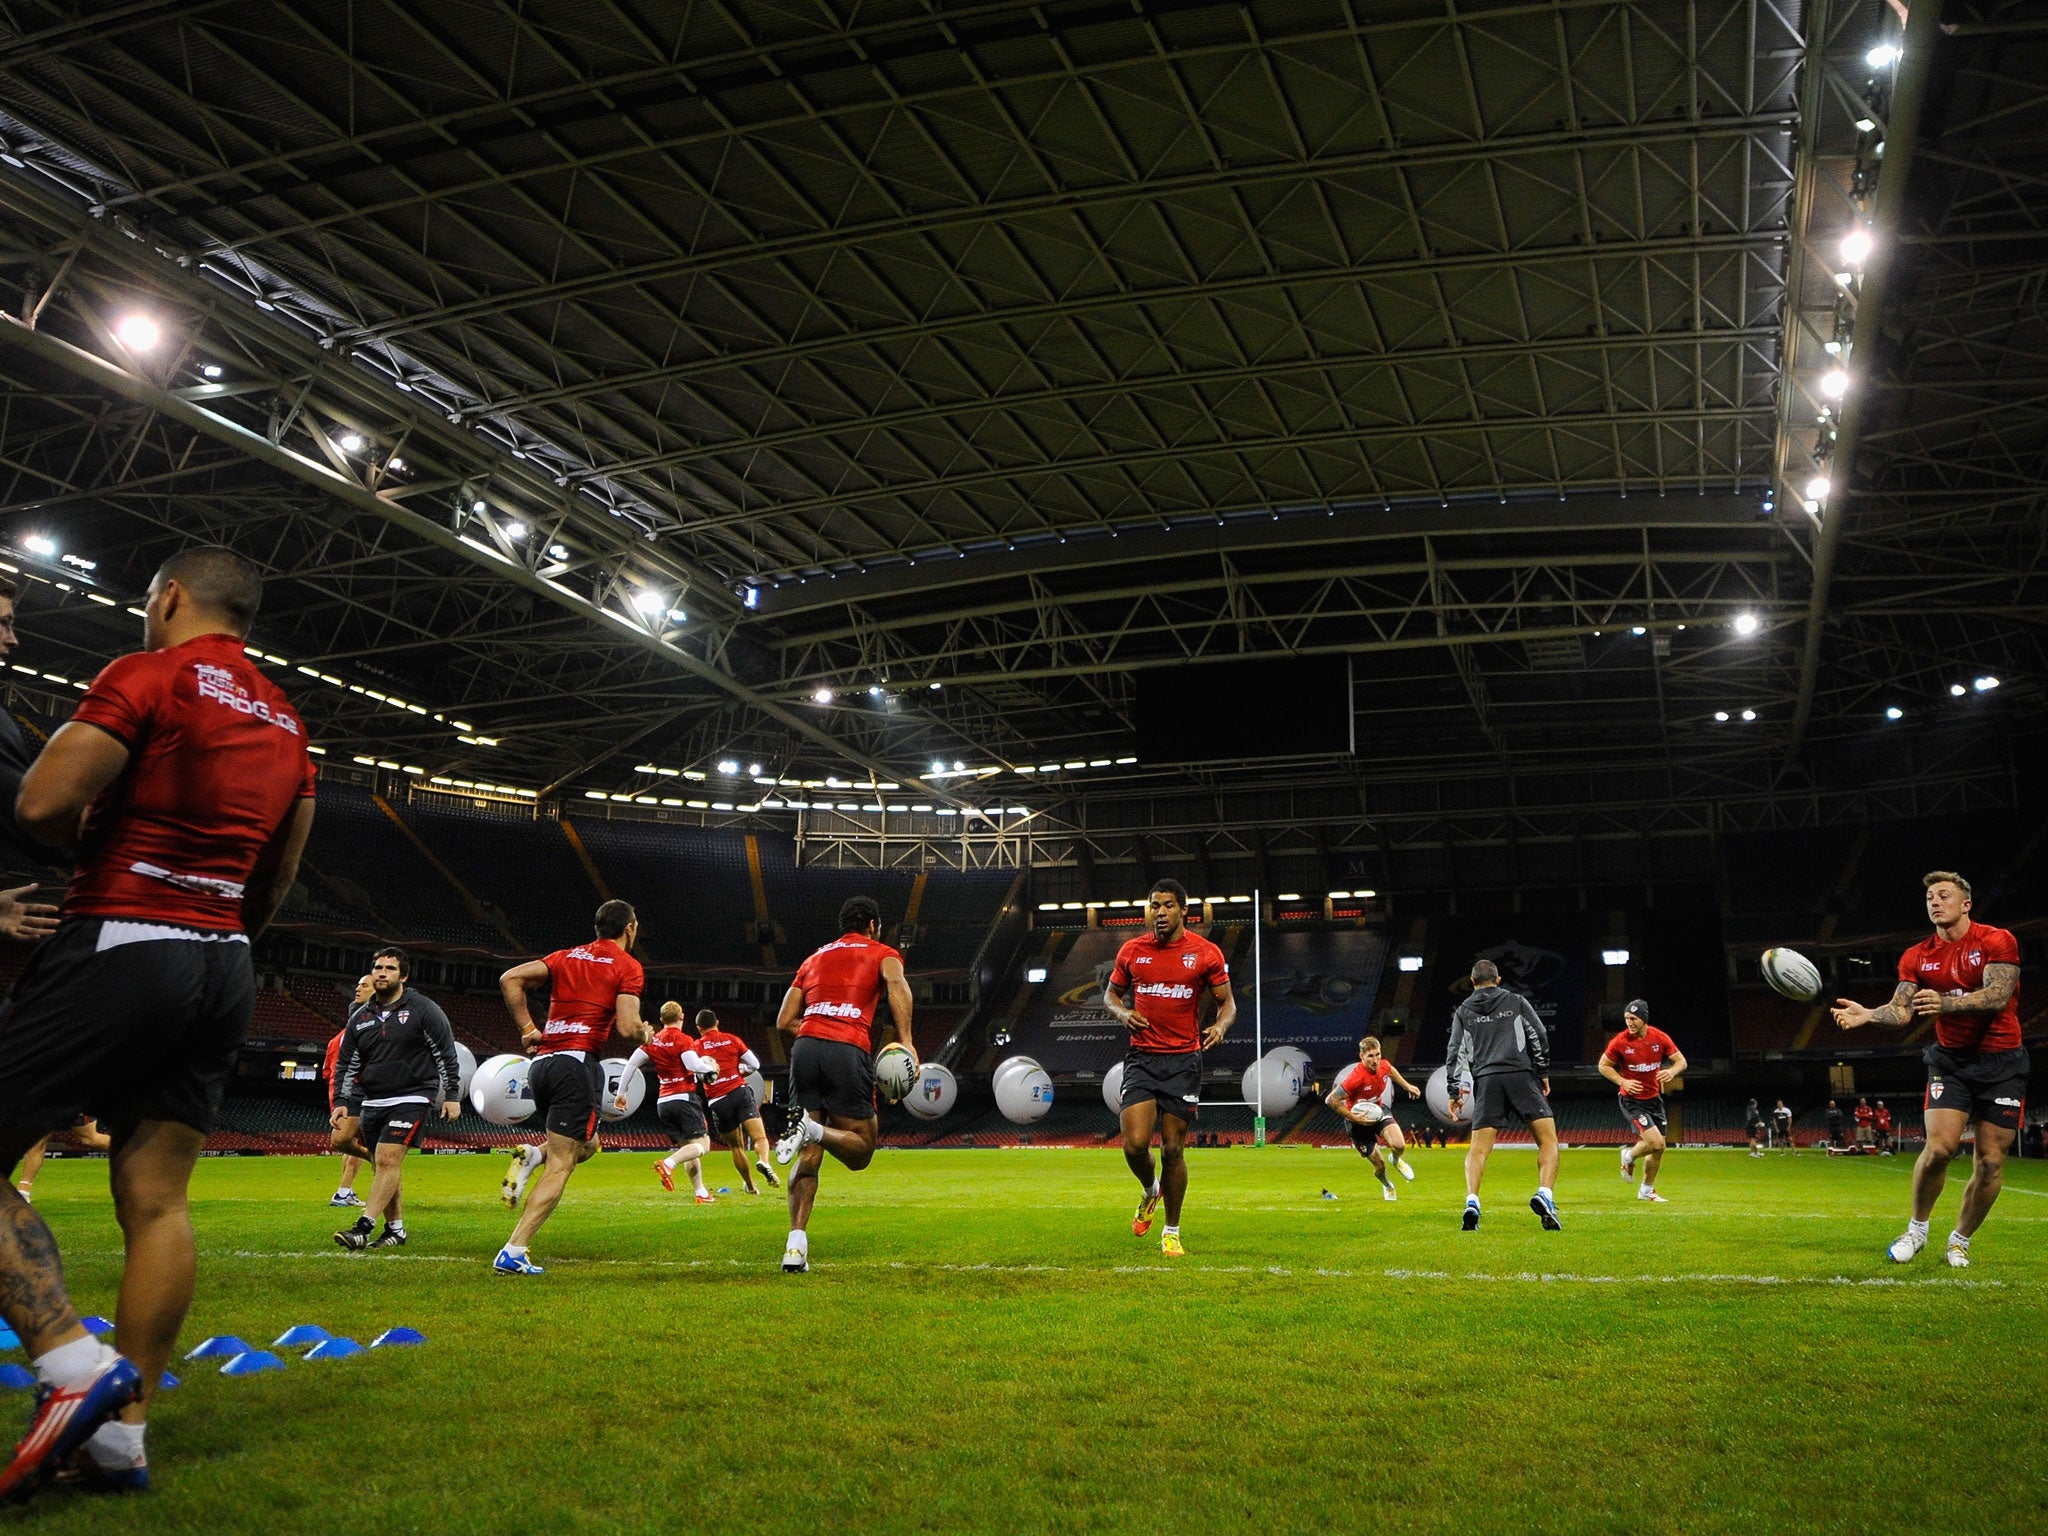 England practise under the closed roof of the Millennium Stadium